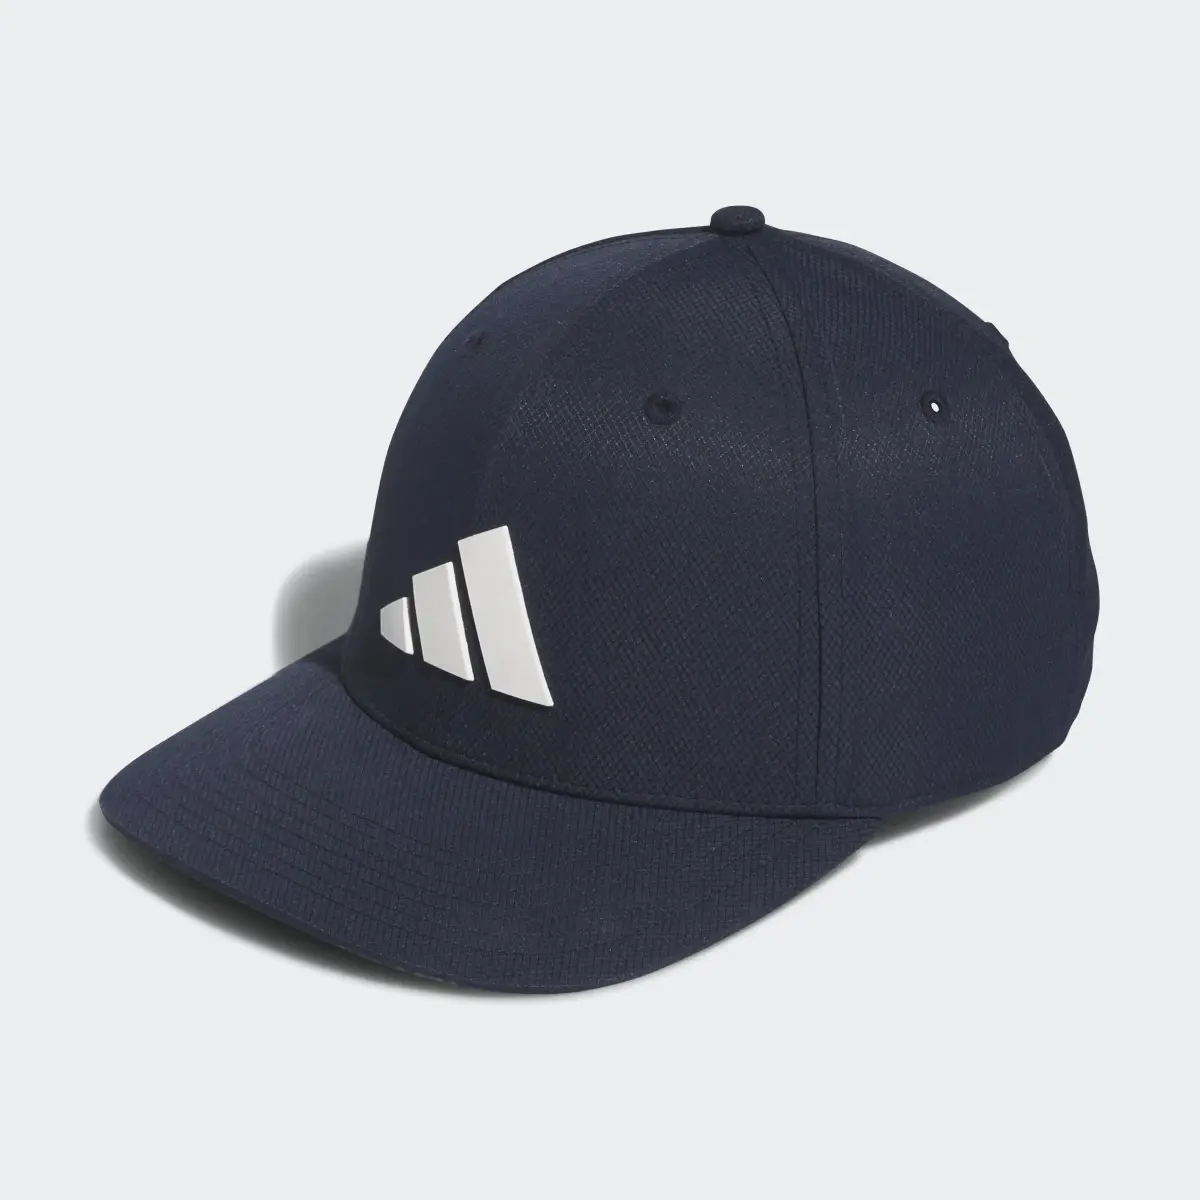 Adidas Tour Snapback Hat. 2